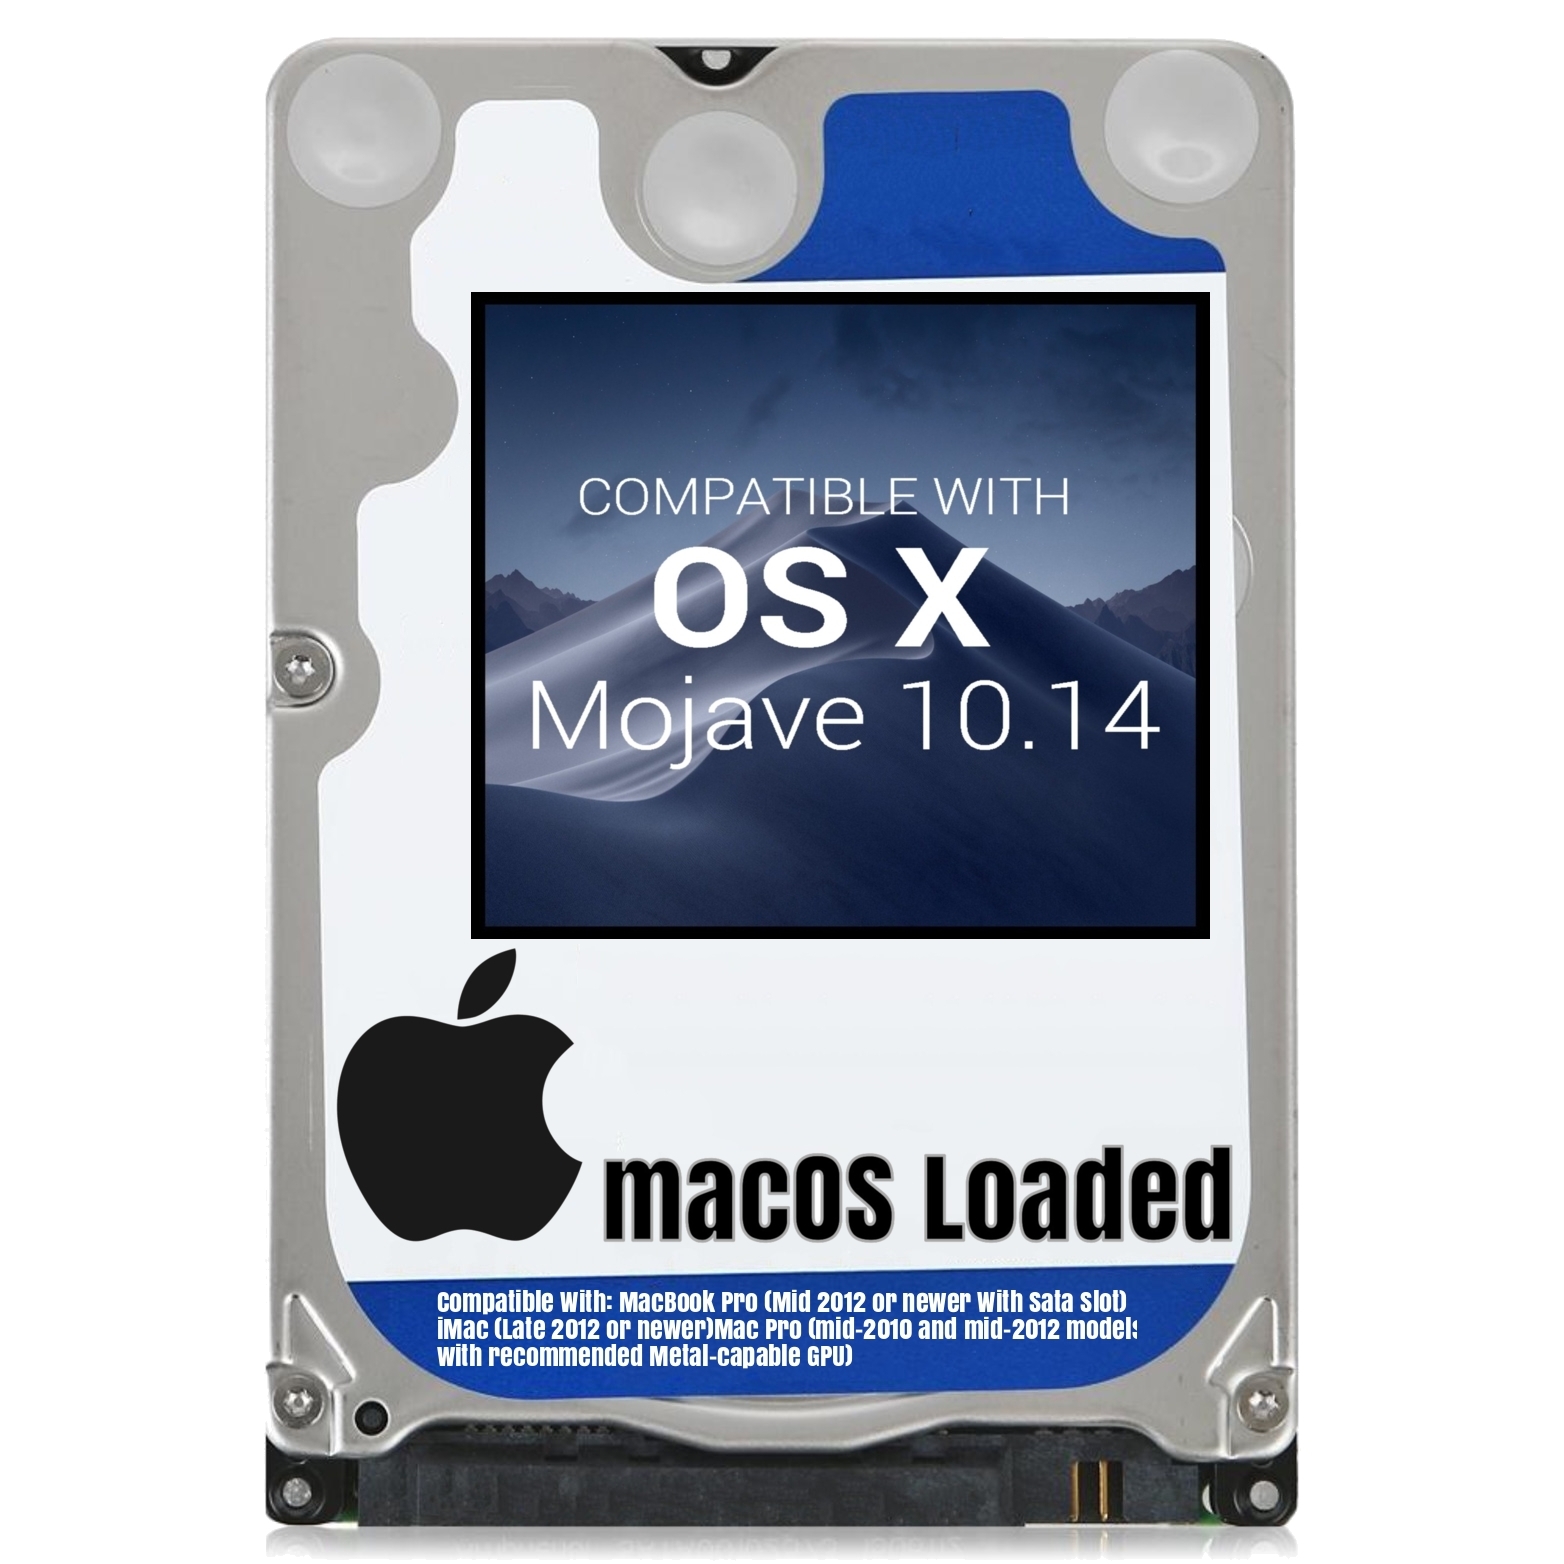 macOS Mac OS X 10.14 Mojave Preloaded on Sata HDD - $13.99 - $36.99